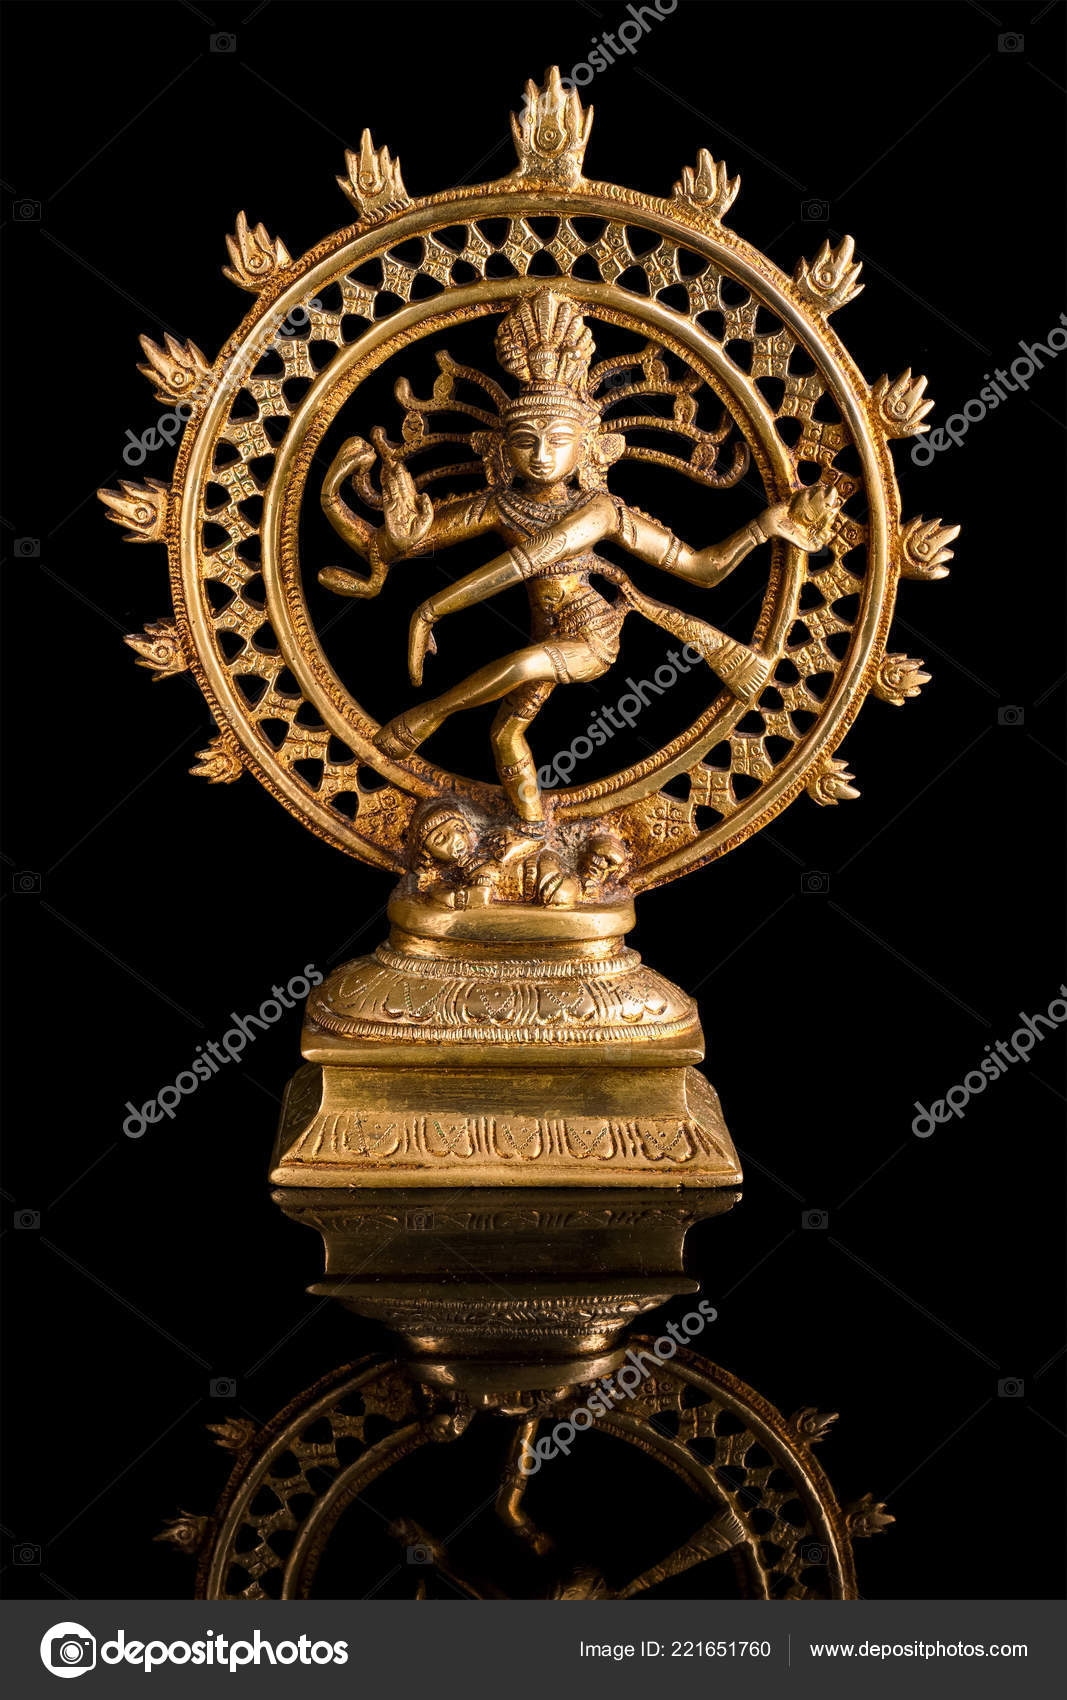 Design Toscano Shiva Dancing Goddess of Cosmic Energy Figurine & Reviews |  Wayfair